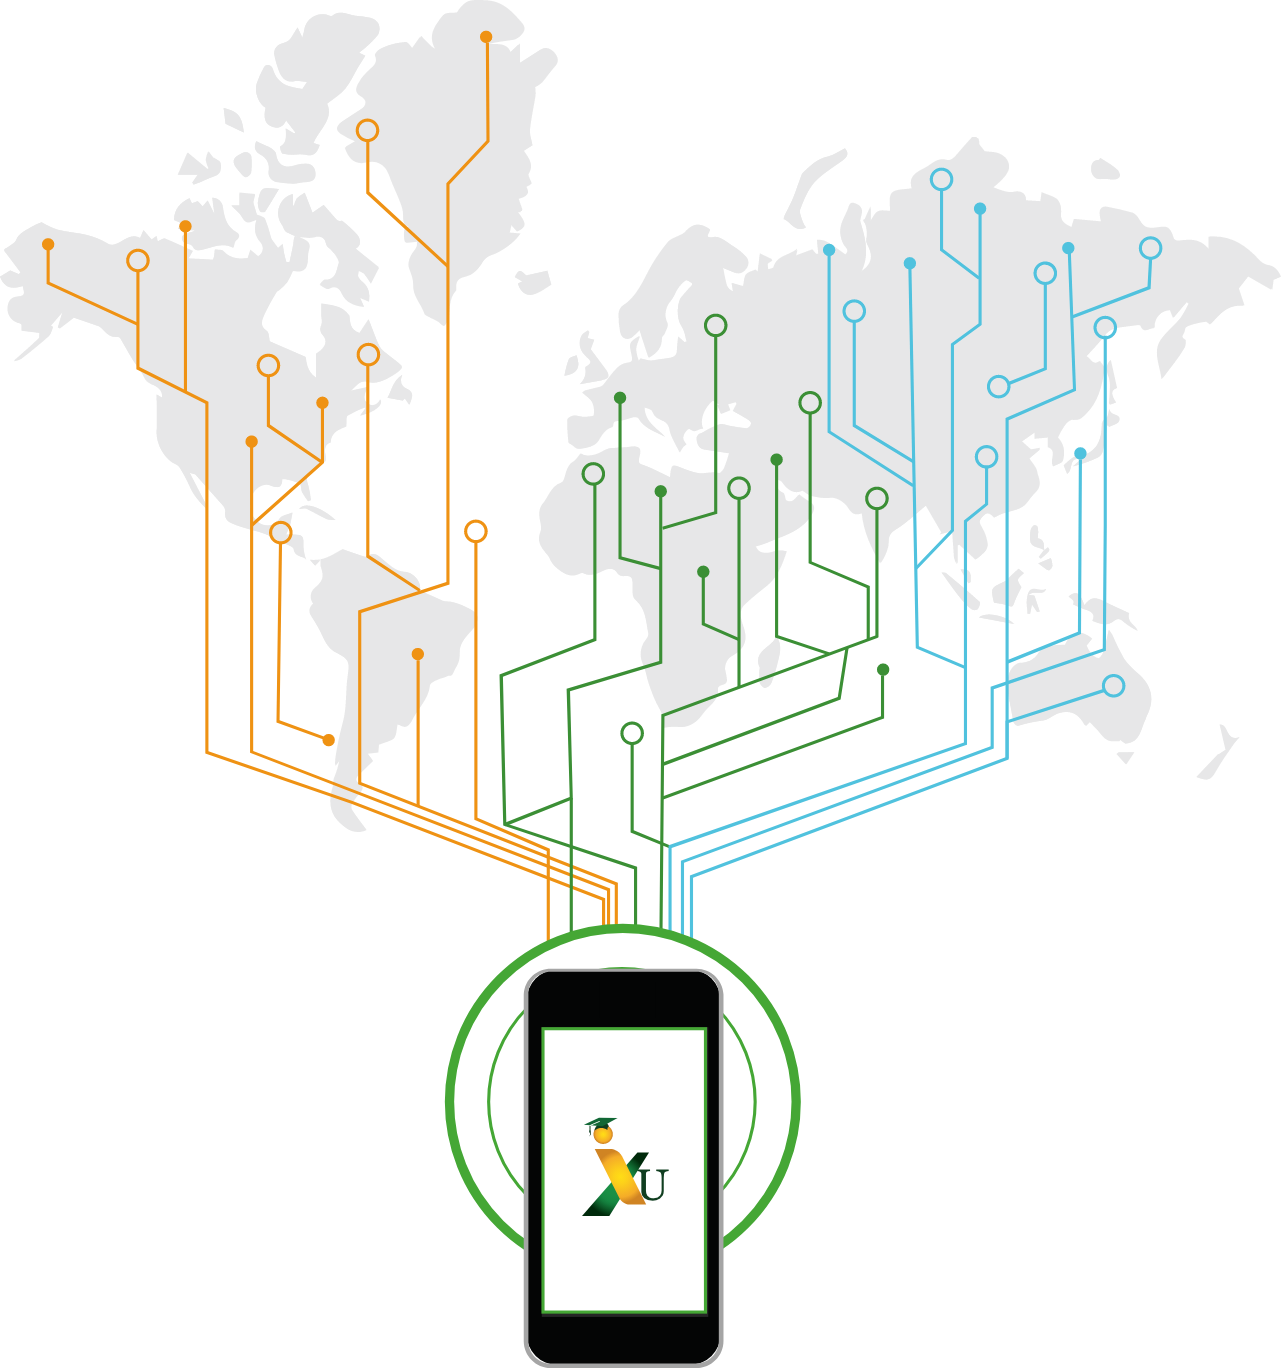 IXU logo on black smartphone under a map of the world